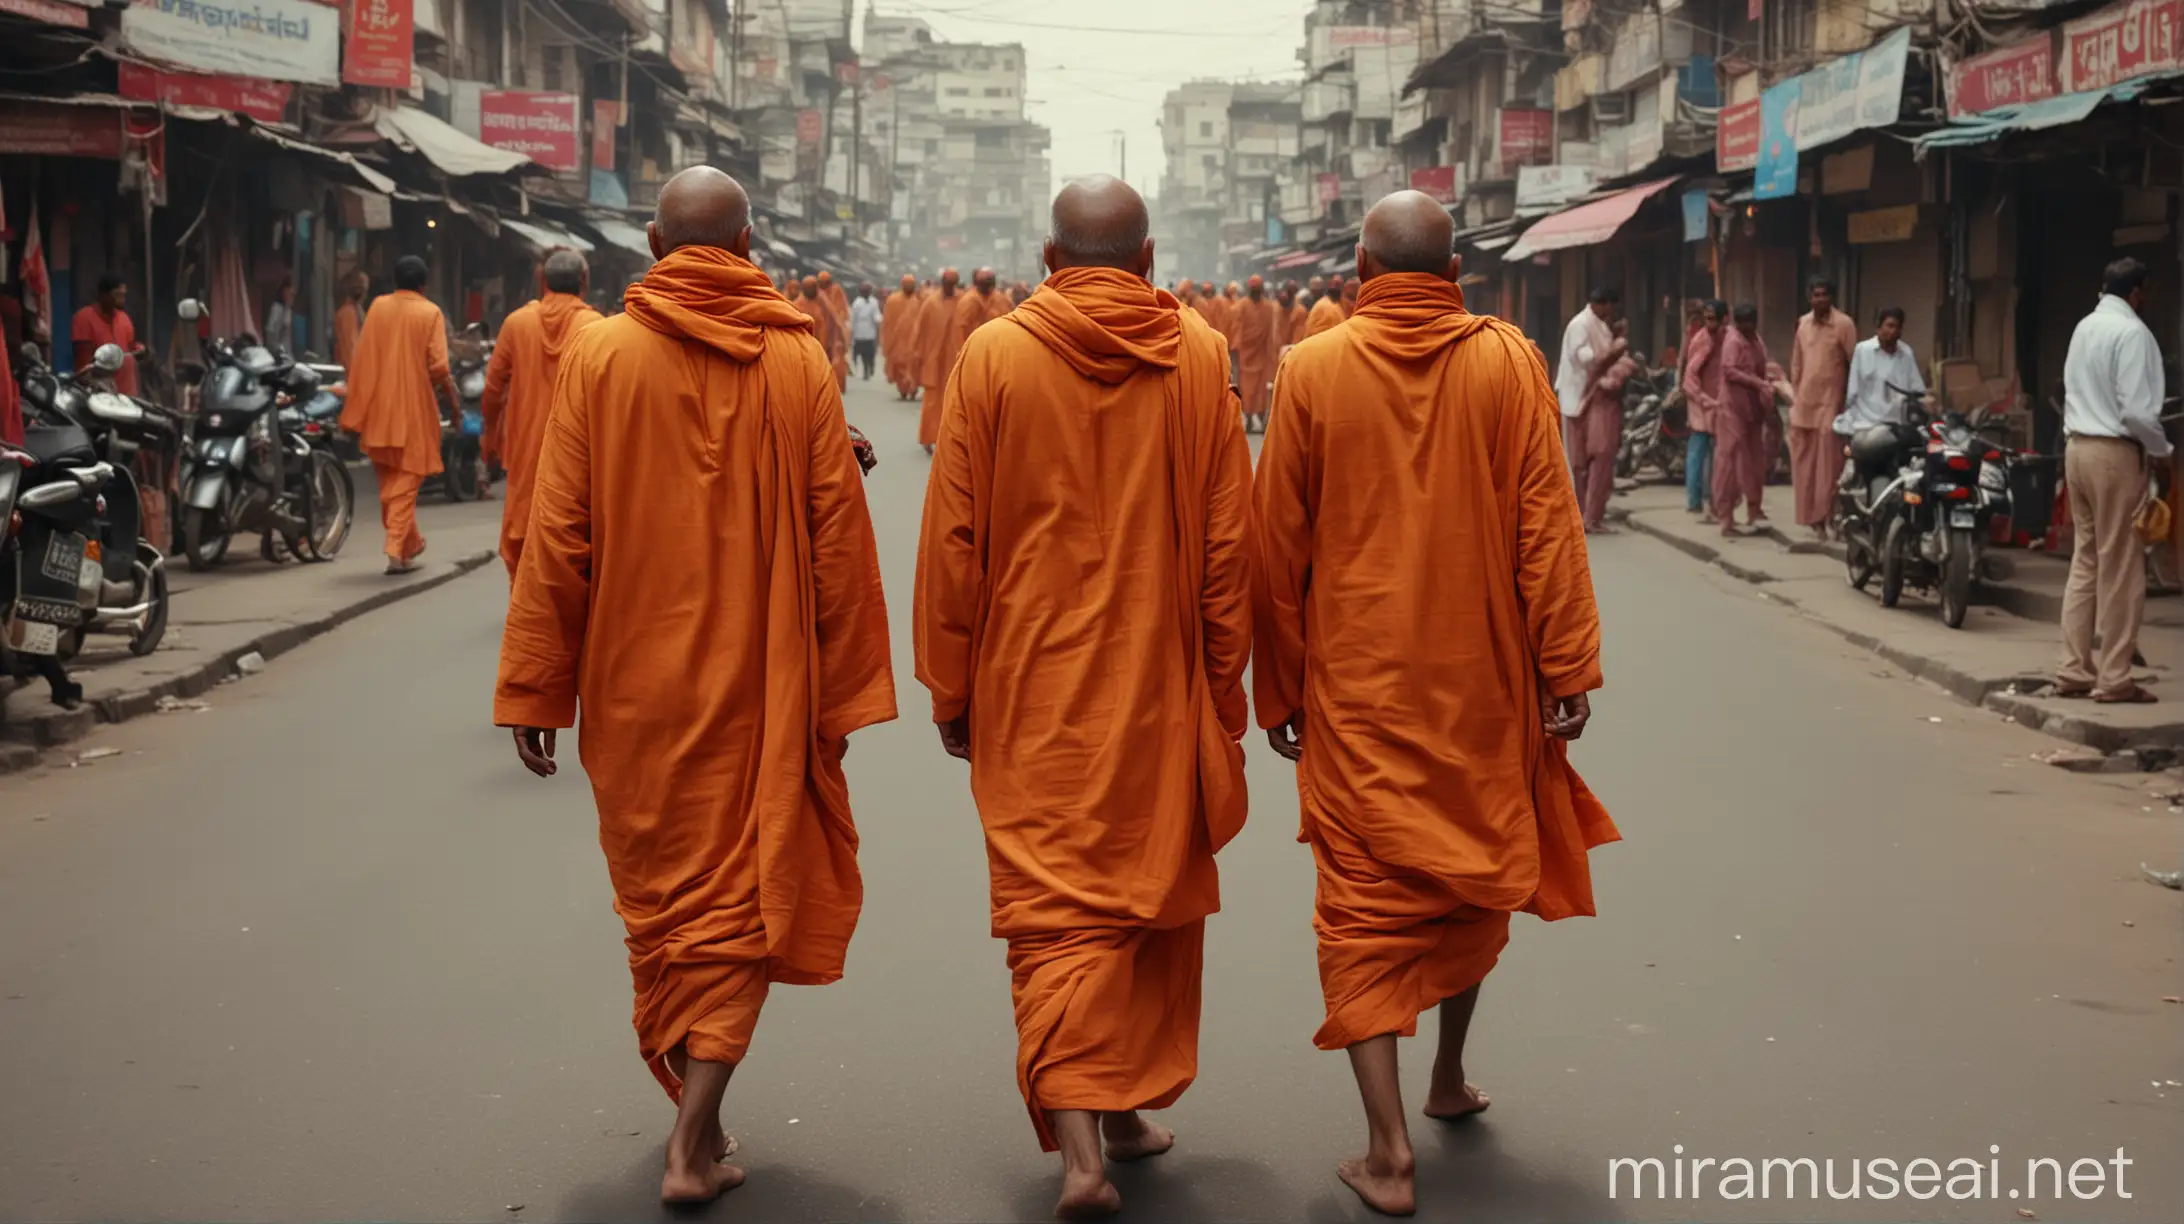 Indian Holy Men in Orange Robes Walking on Busy Street